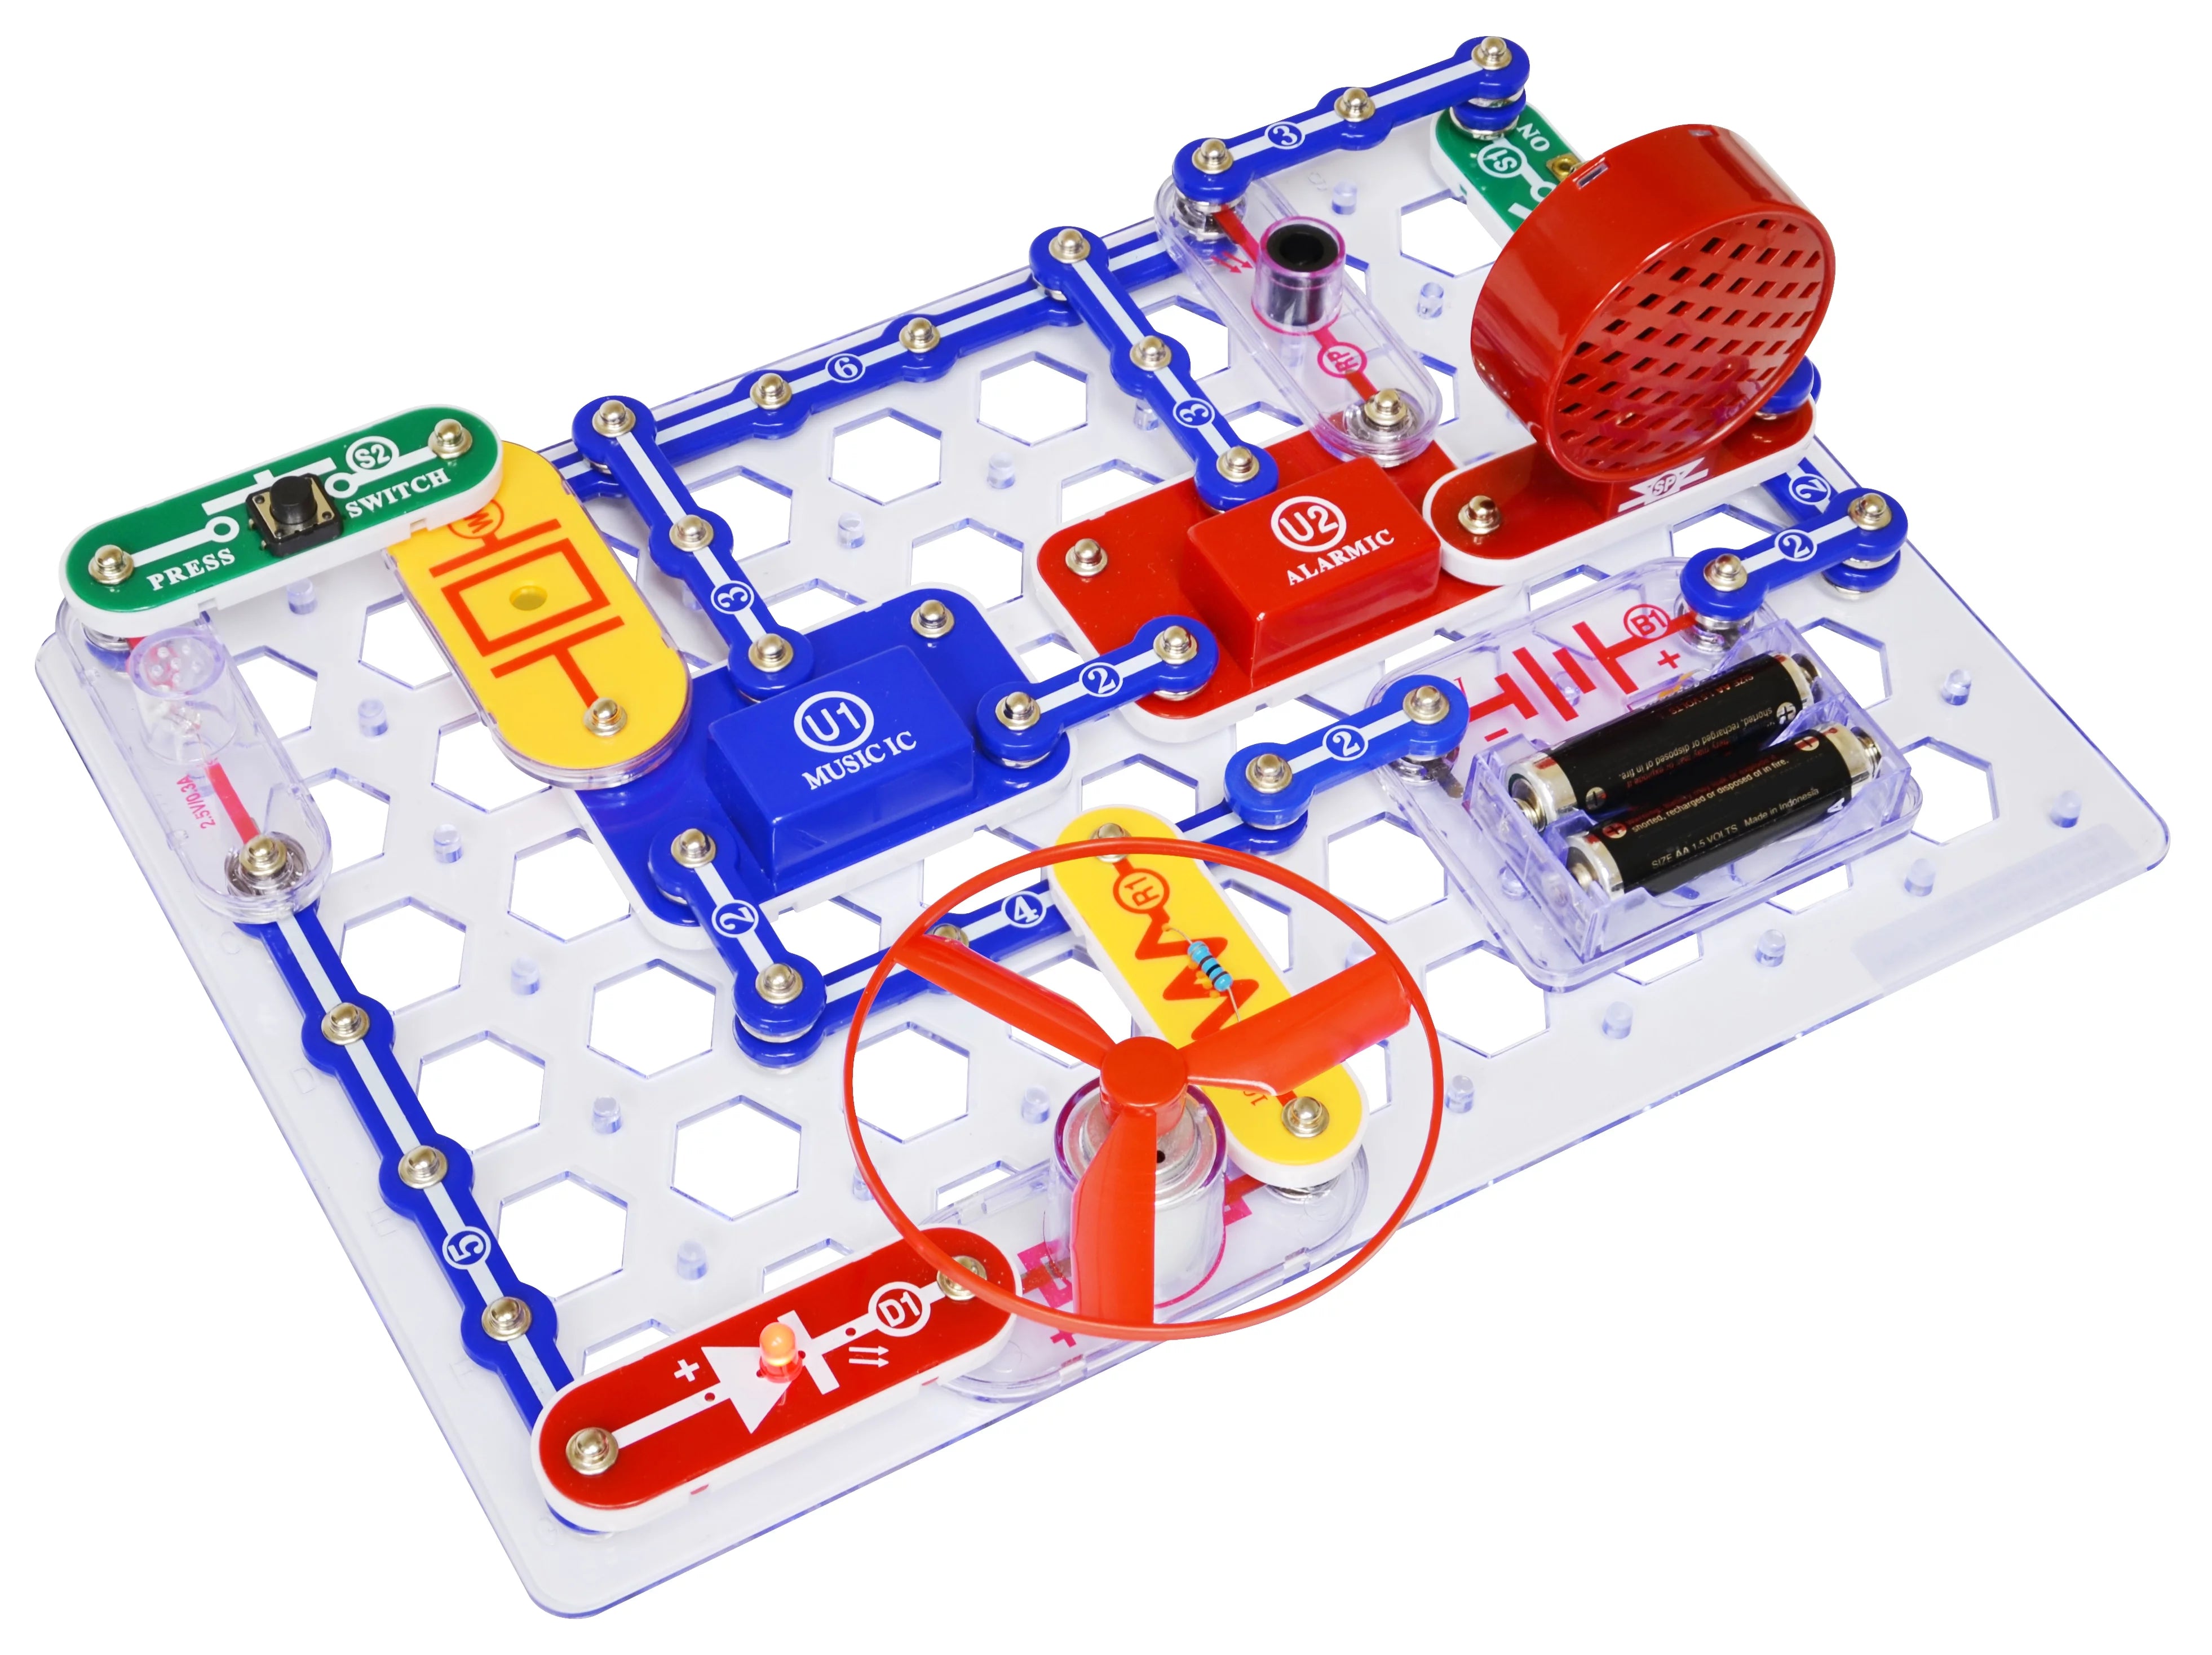 Children's toy circuit model